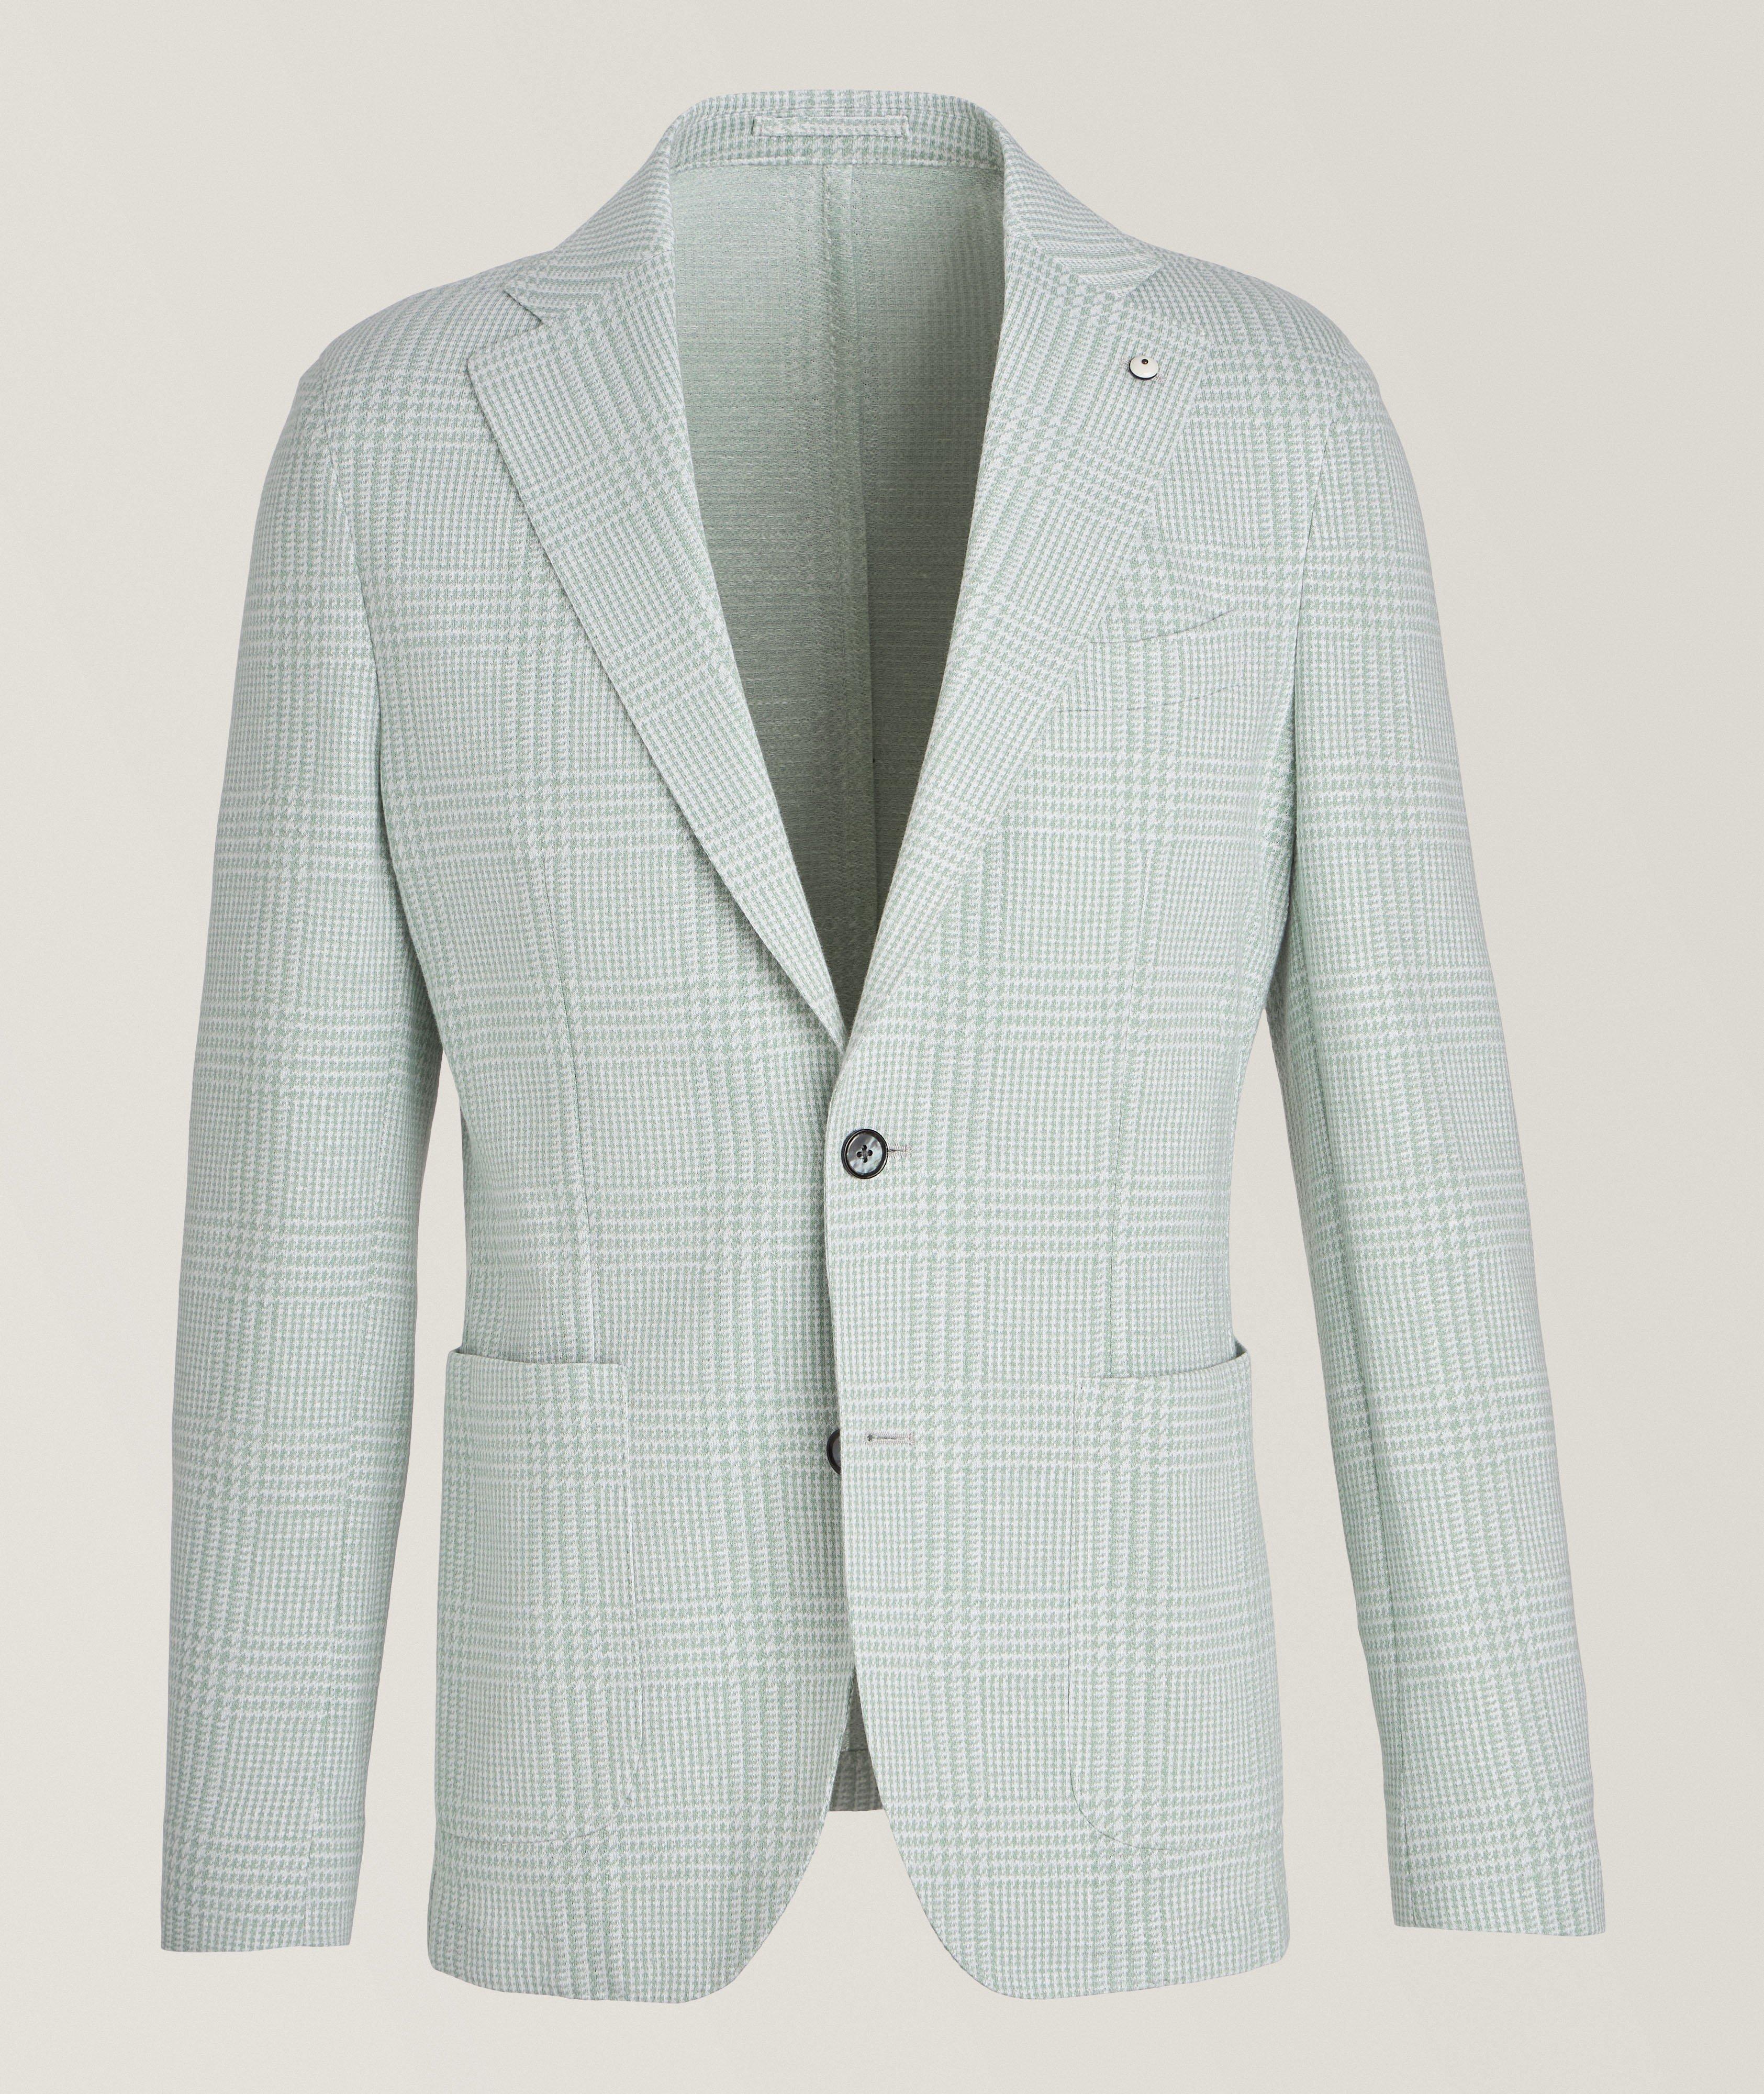 Stitched Jersey Linen-Cotton Sport Jacket  image 0